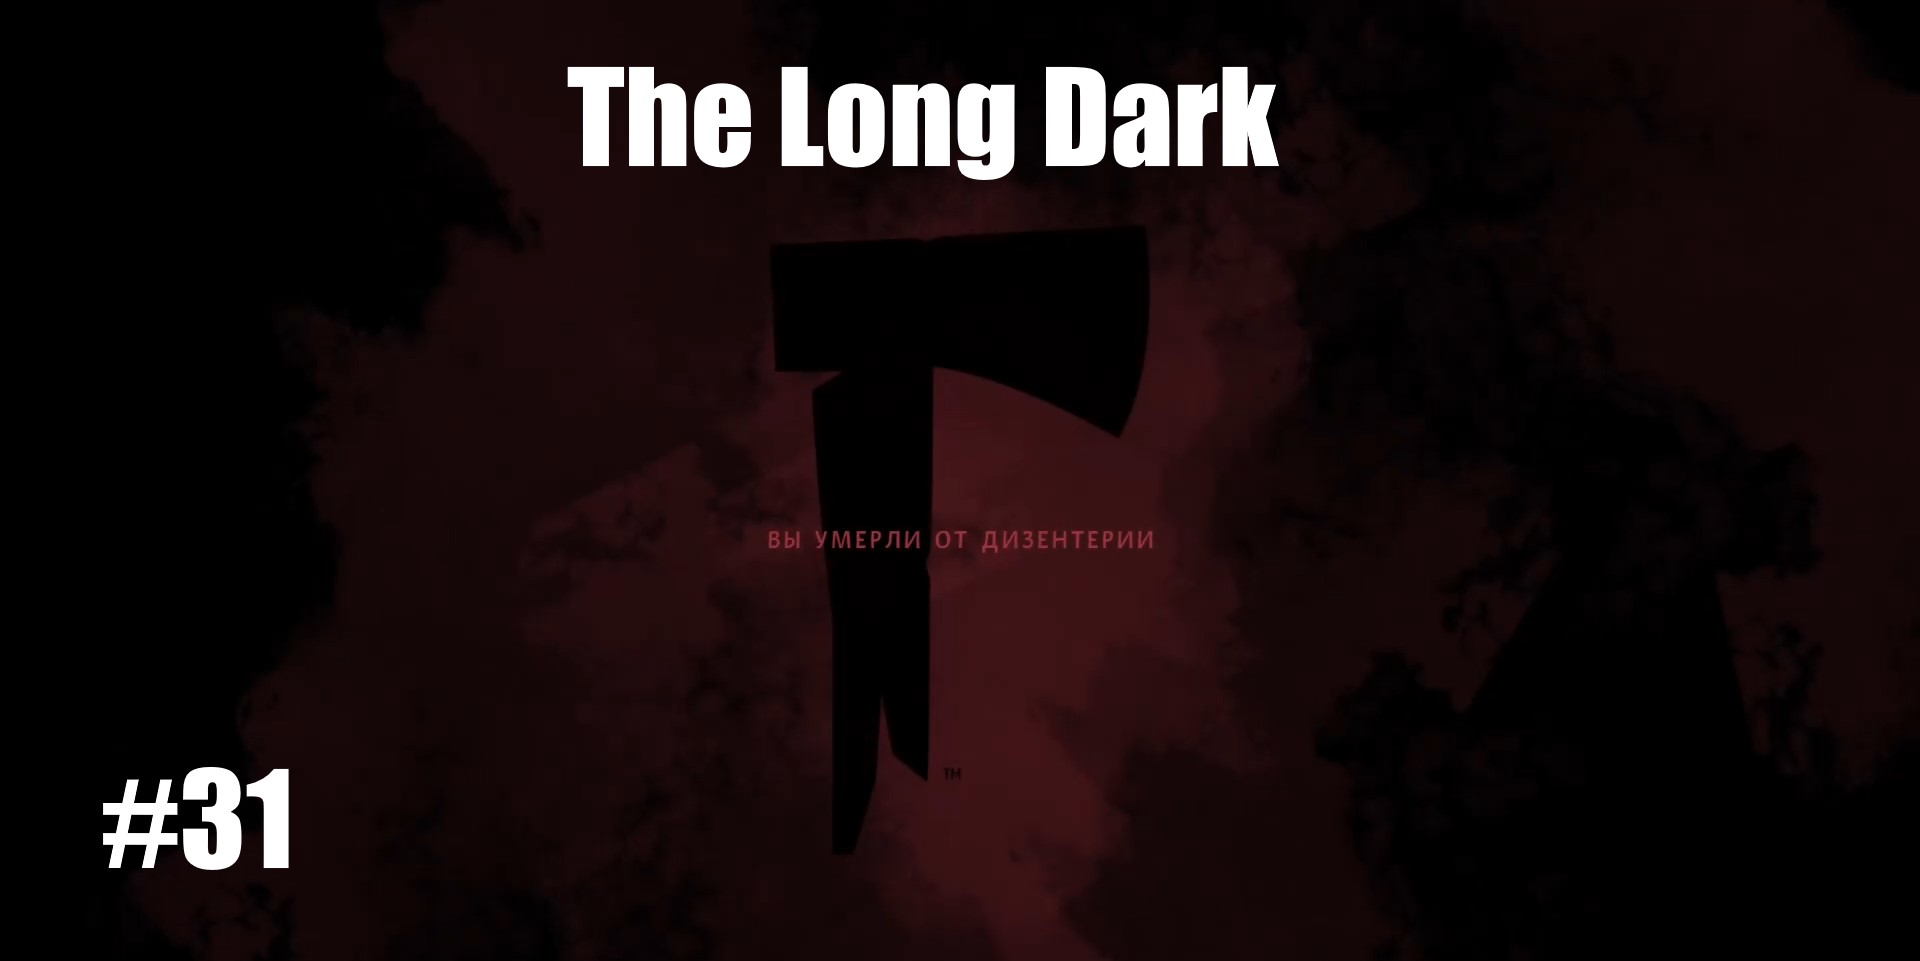 The Long Dark #31 Дизентерия